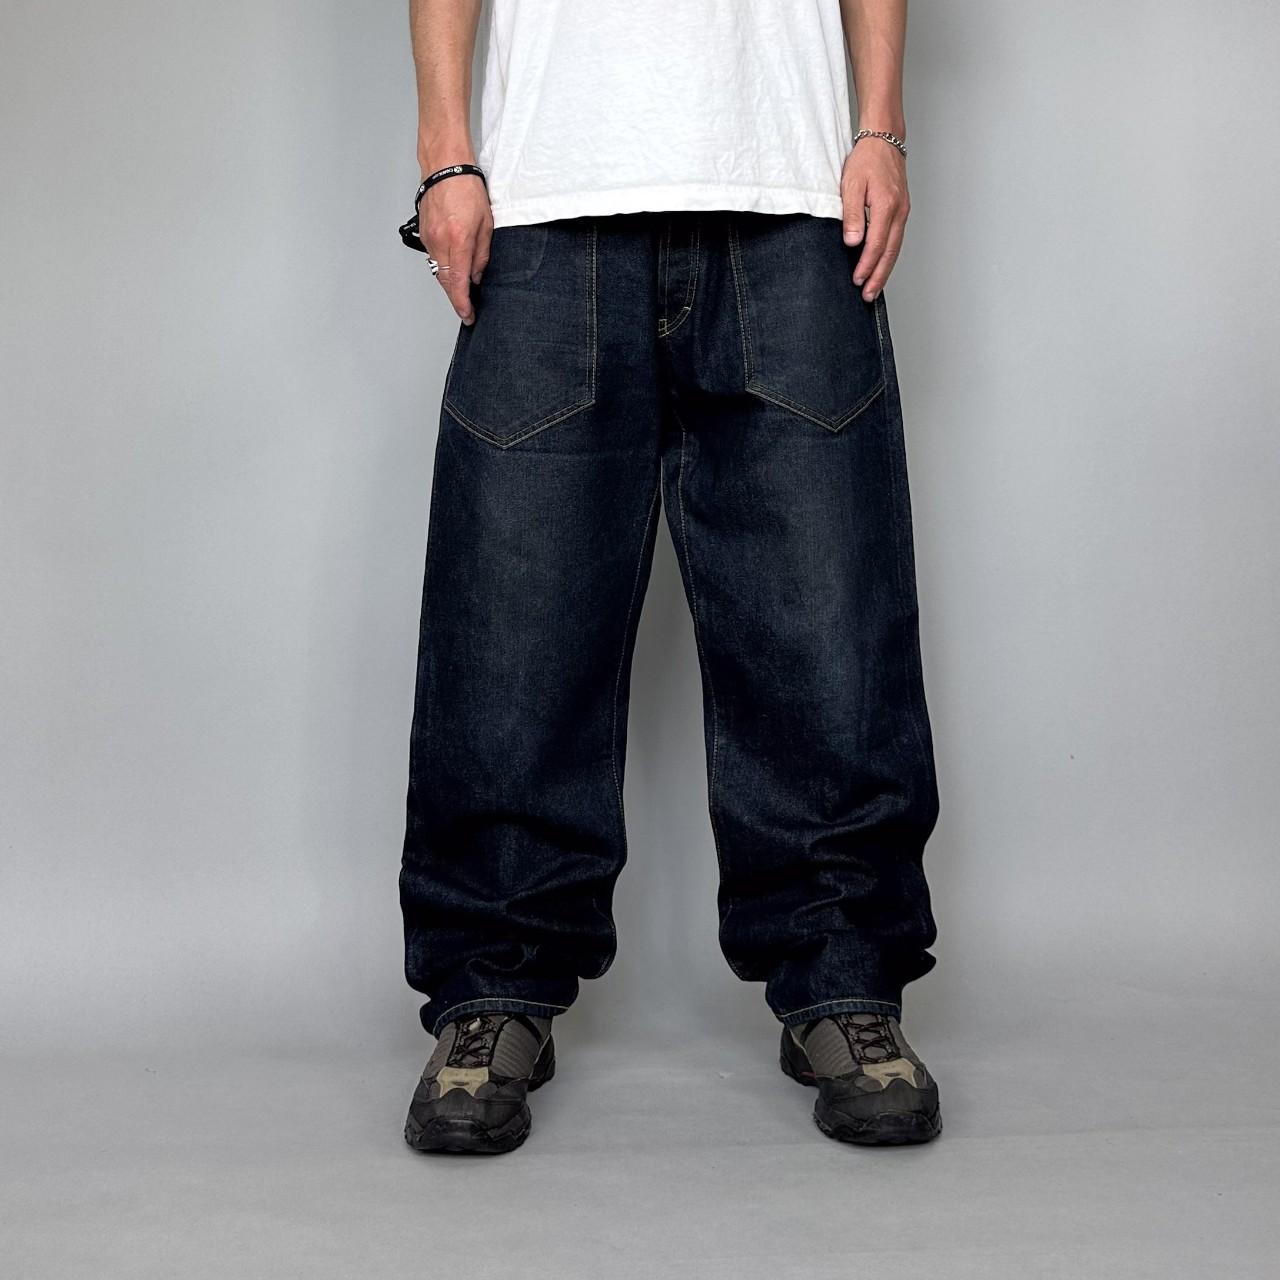 Evisu Men's White and Blue Jeans | Depop